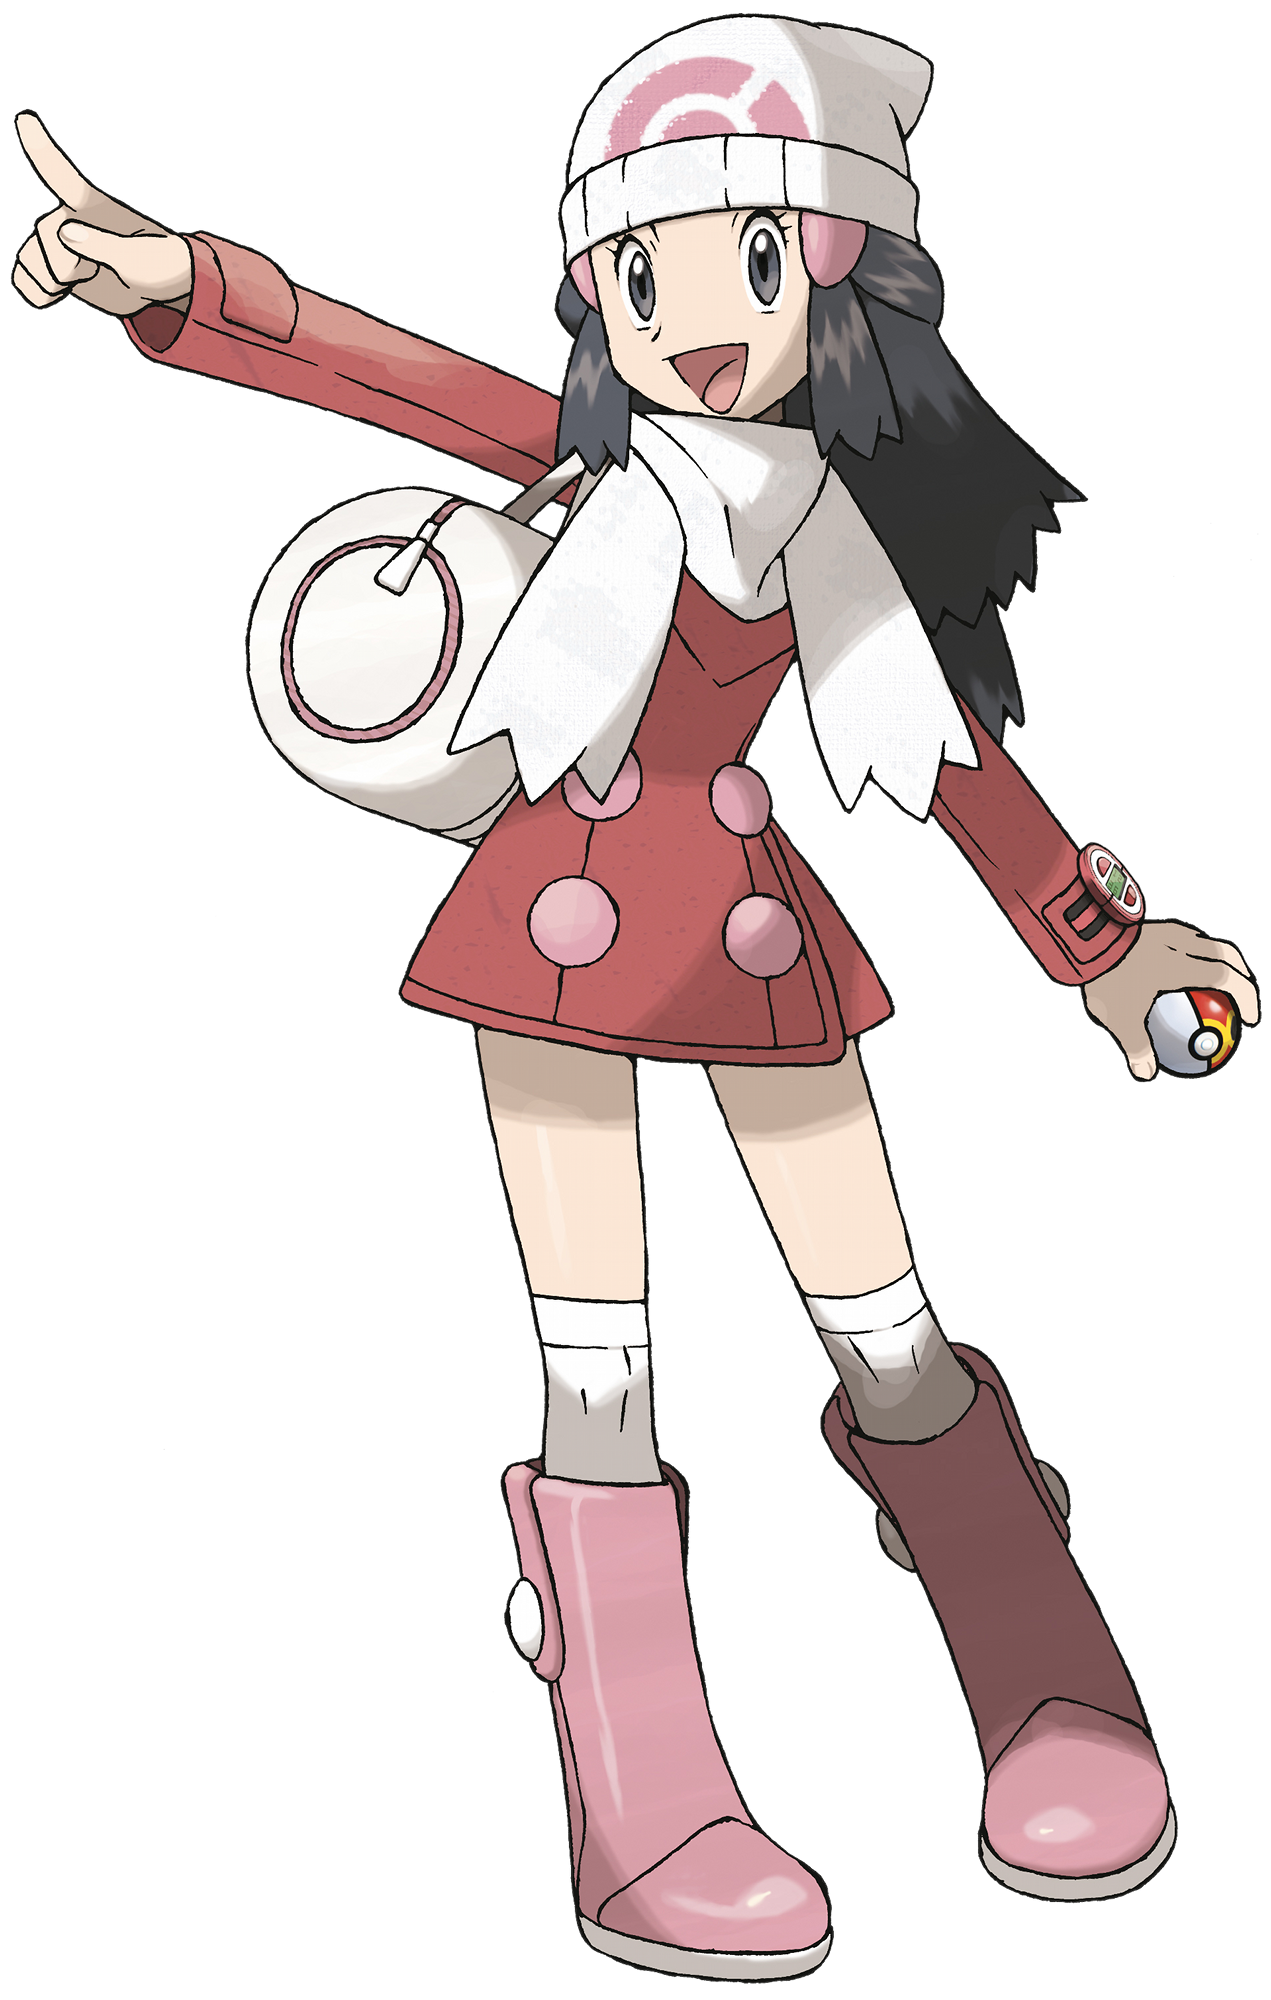 Dawn Stone - Bulbapedia, the community-driven Pokémon encyclopedia